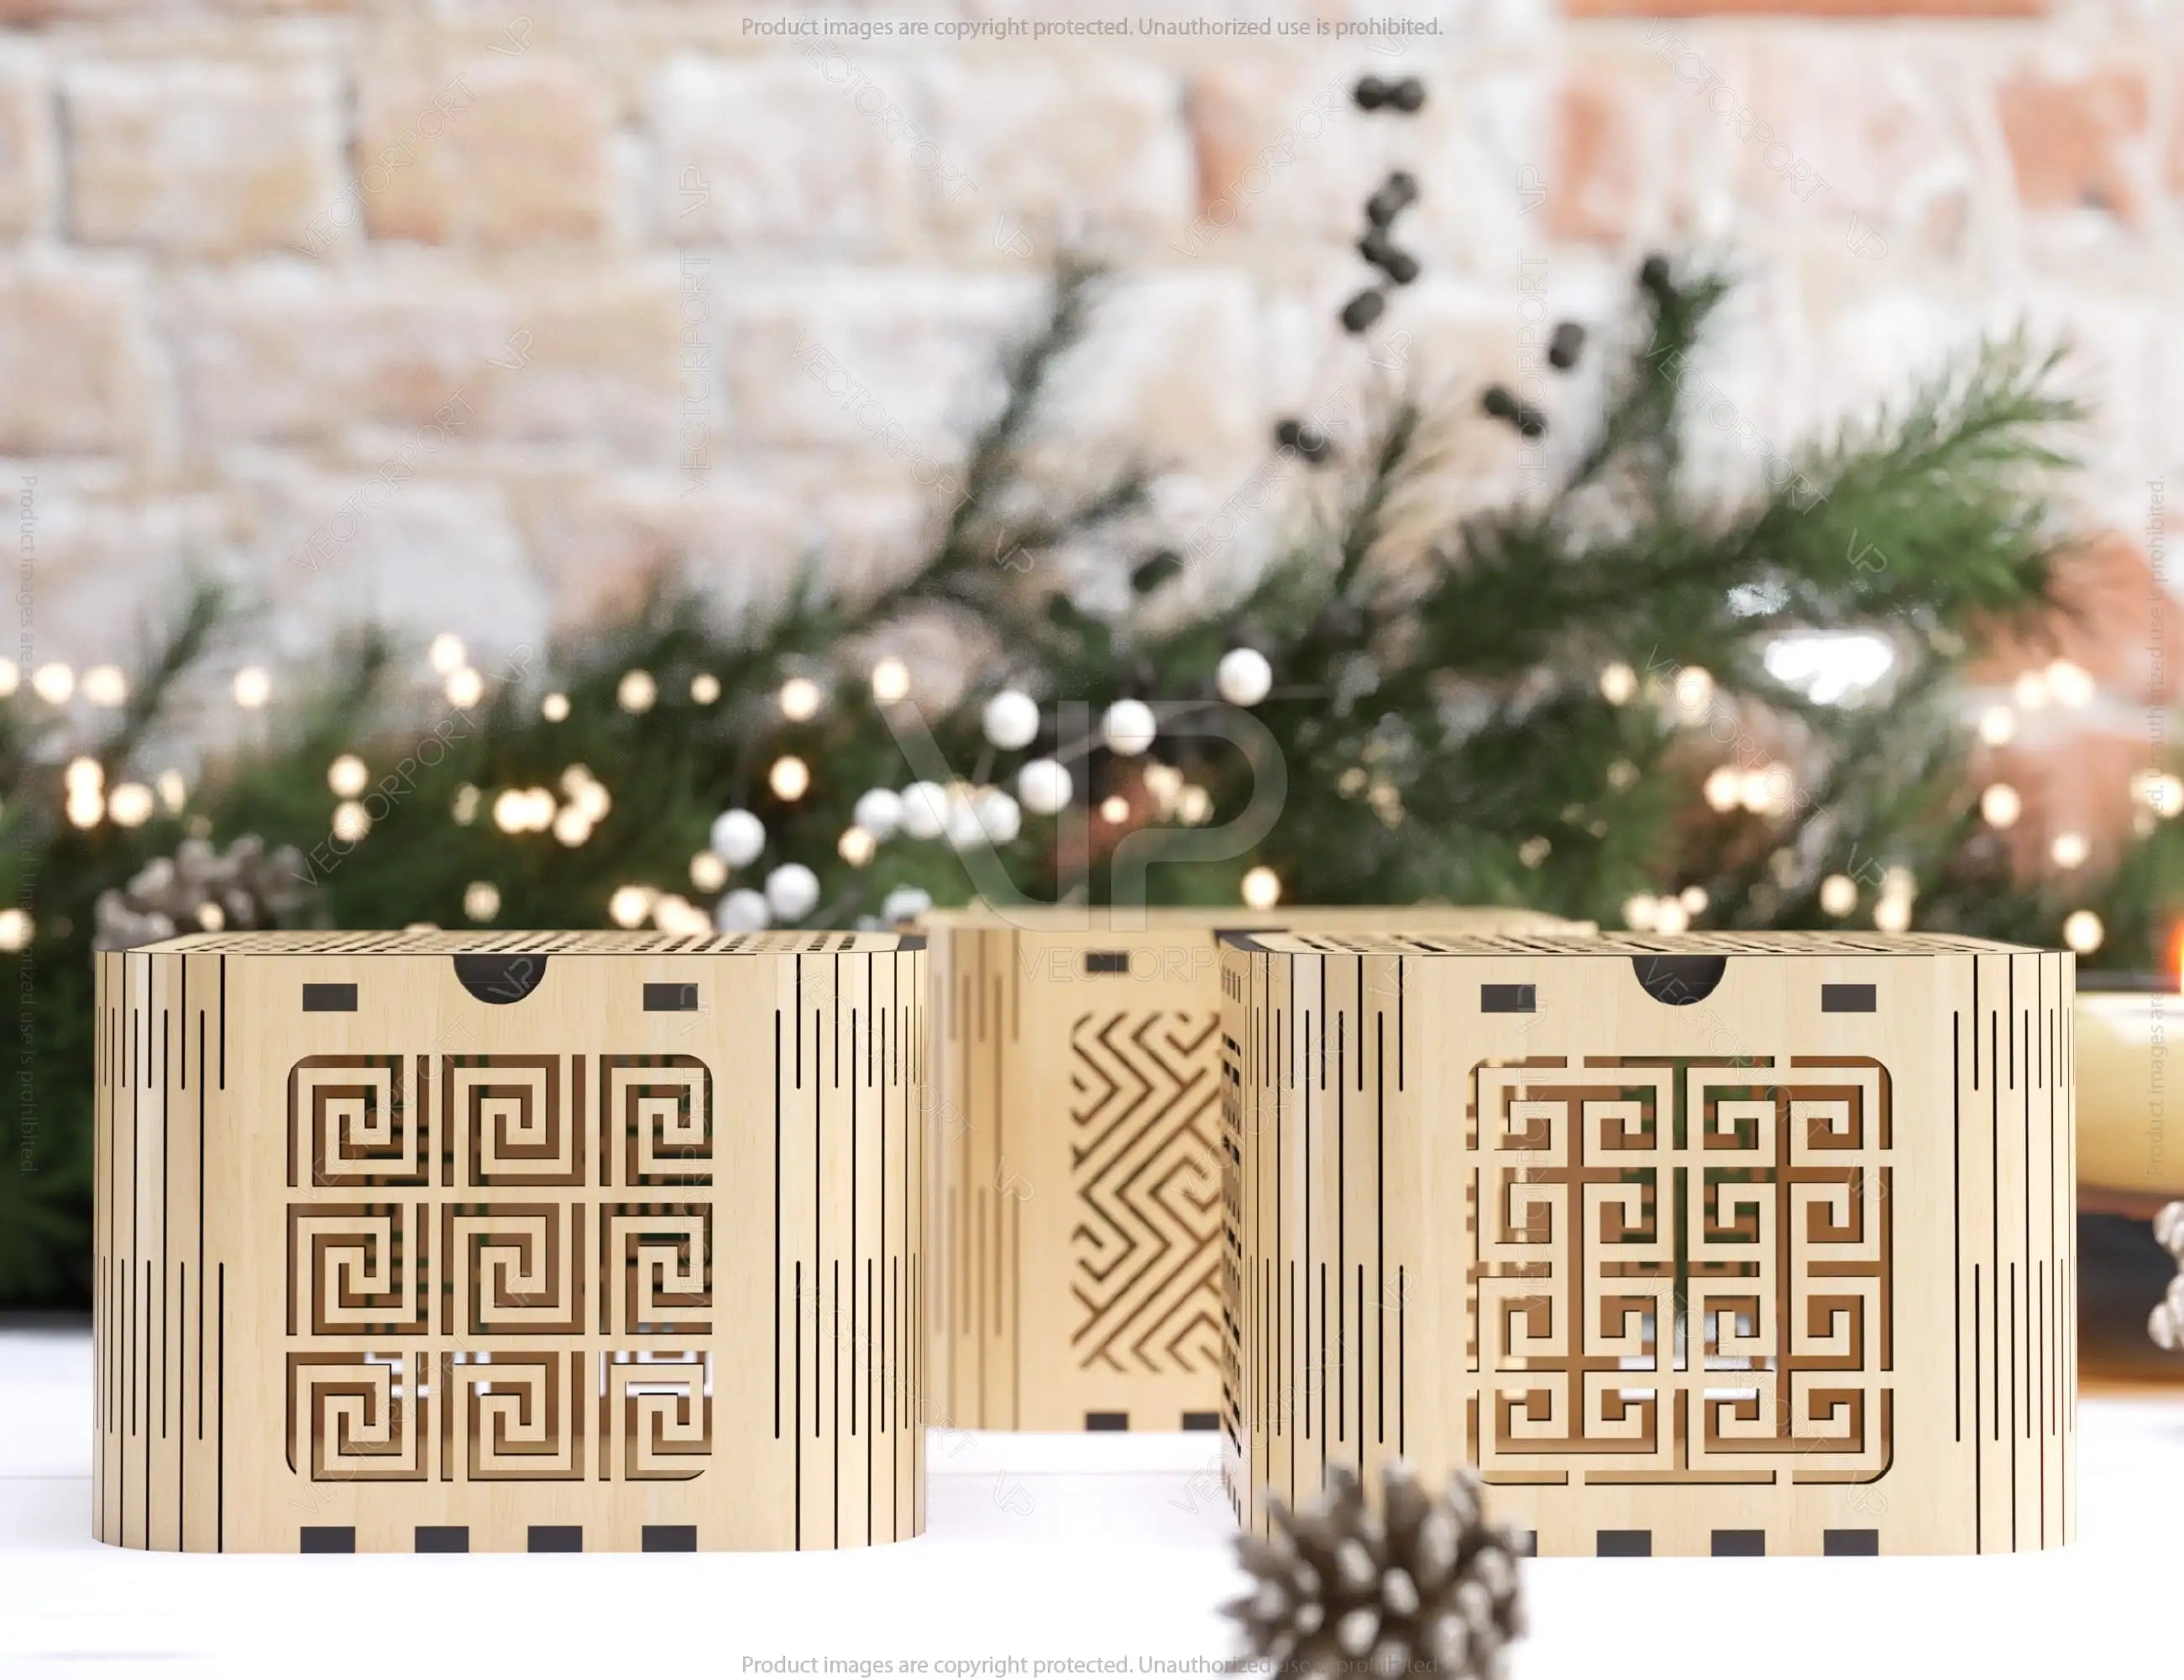 Decorative Wooden Gift Box laser cut jeweler case Wedding Love vector model Greek Key Pattern Digital Download |#U294|